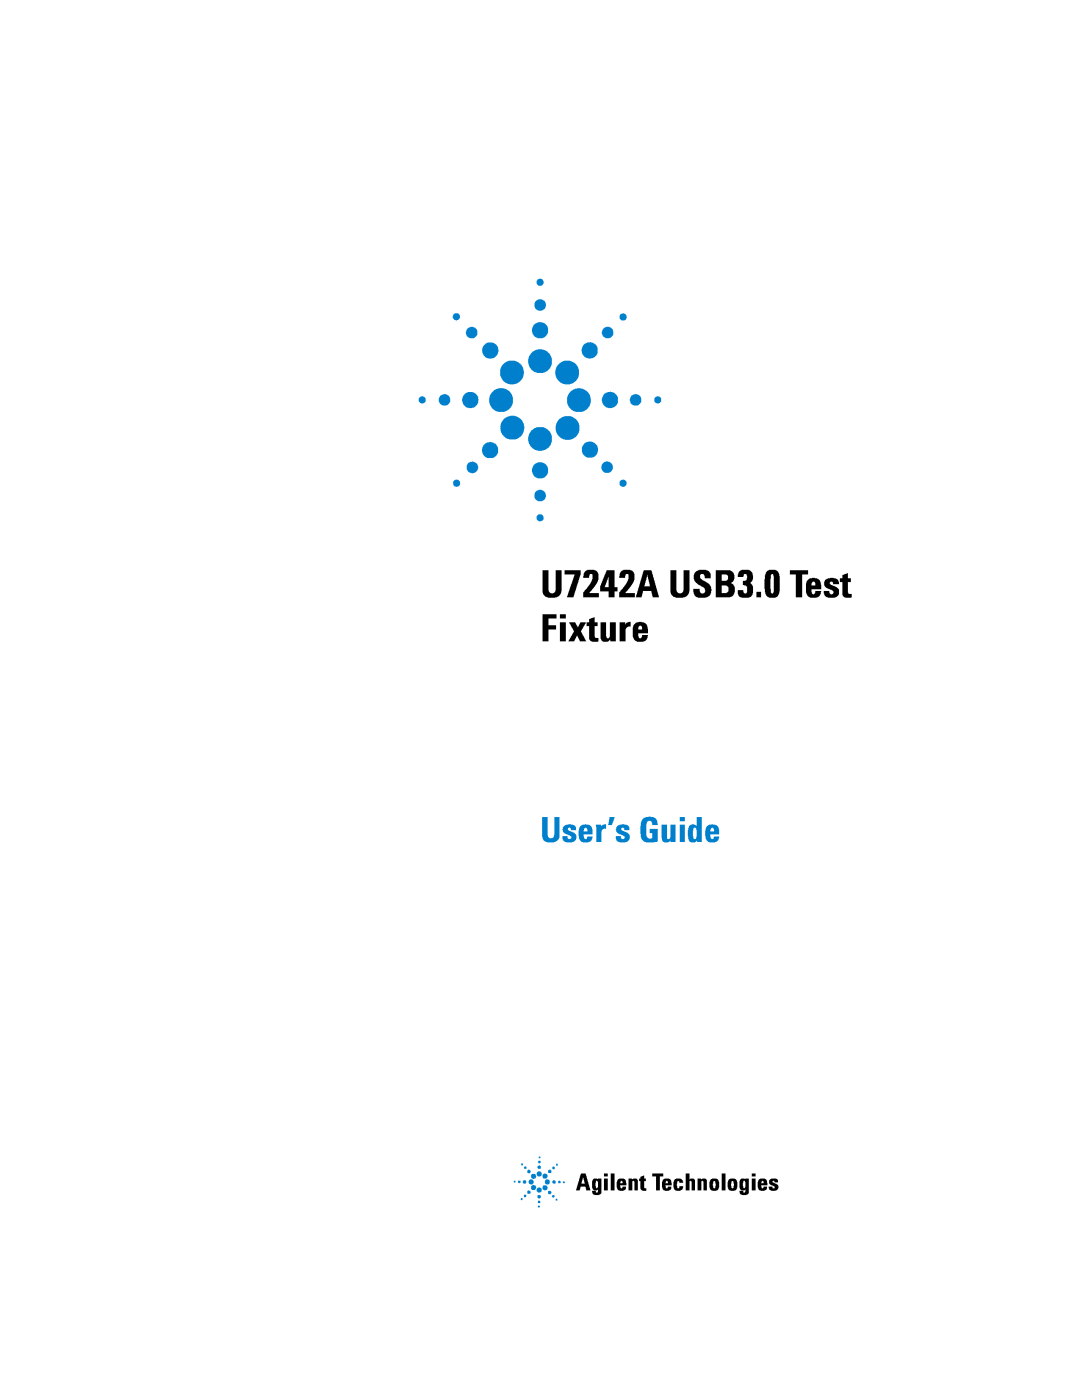 Agilent Technologies manual U7242A USB3.0 Test Fixture, Agilent Technologies, User’s Guide 